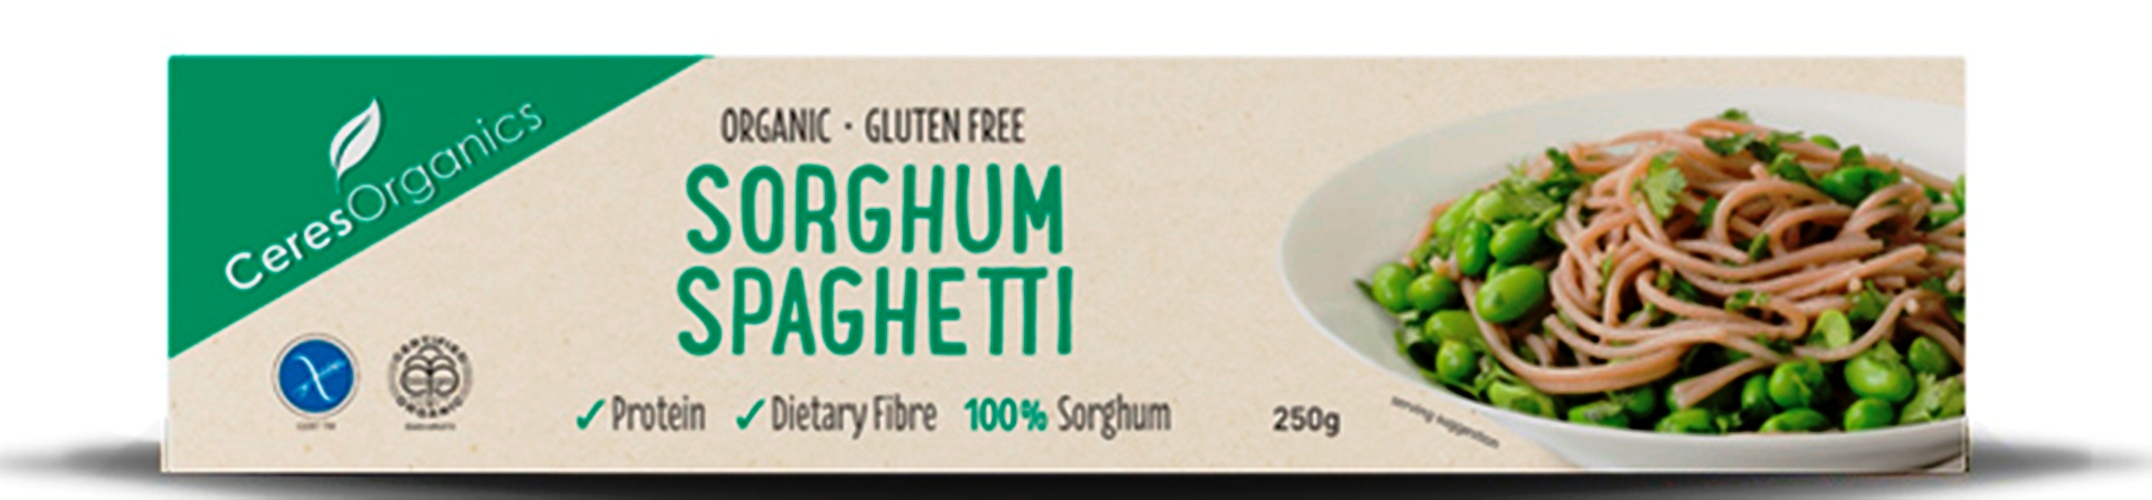 Sorghum Spaghetti Gluten Free Certified Organic (250g)